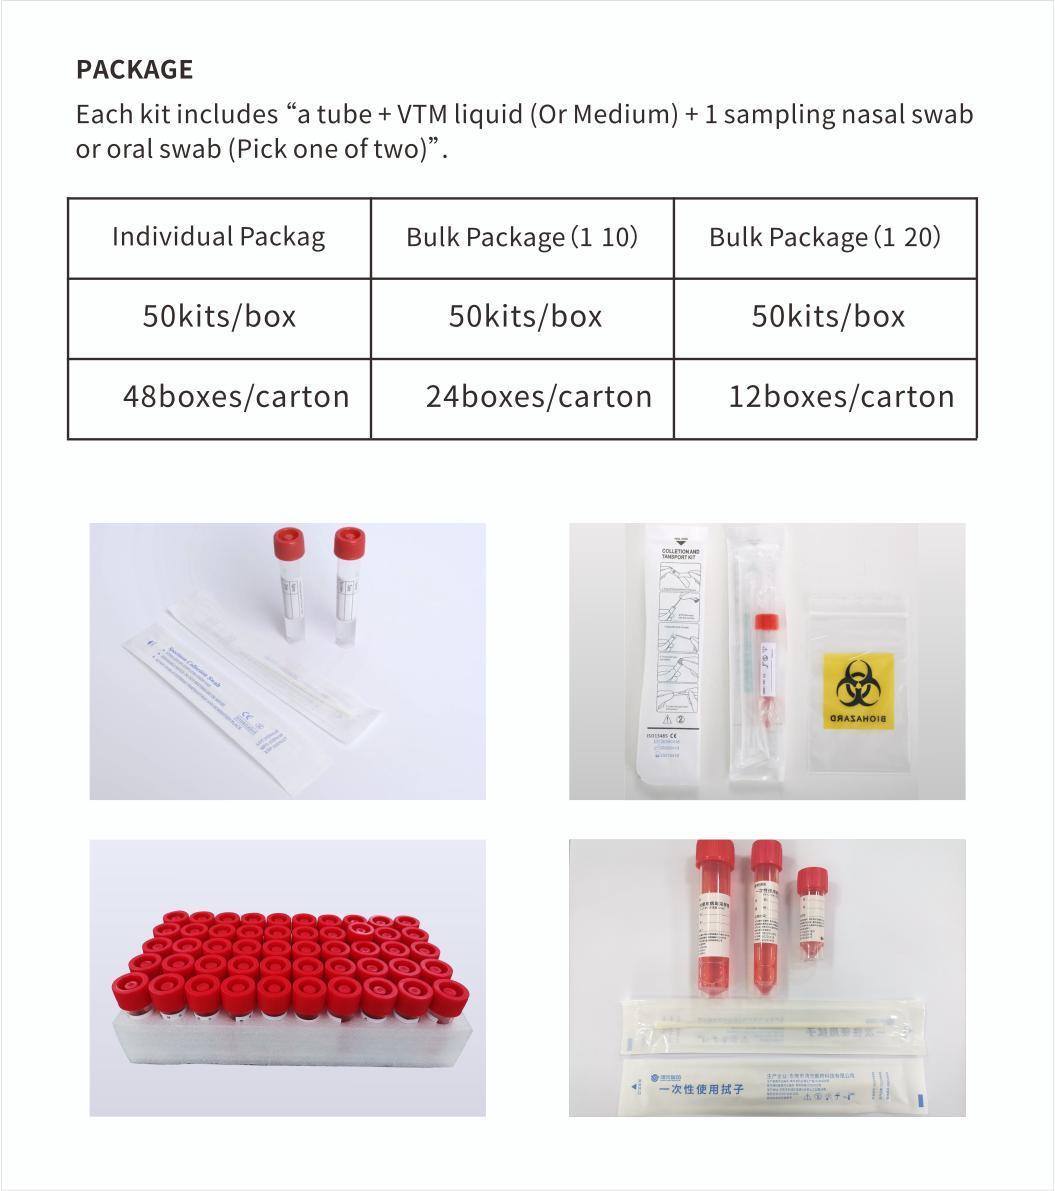 Medical Supplies 3ml Vtm Viral Transport Medium Virus Collection Sampling Tube with Nasal Swabs for Rapid Diagnostic Test